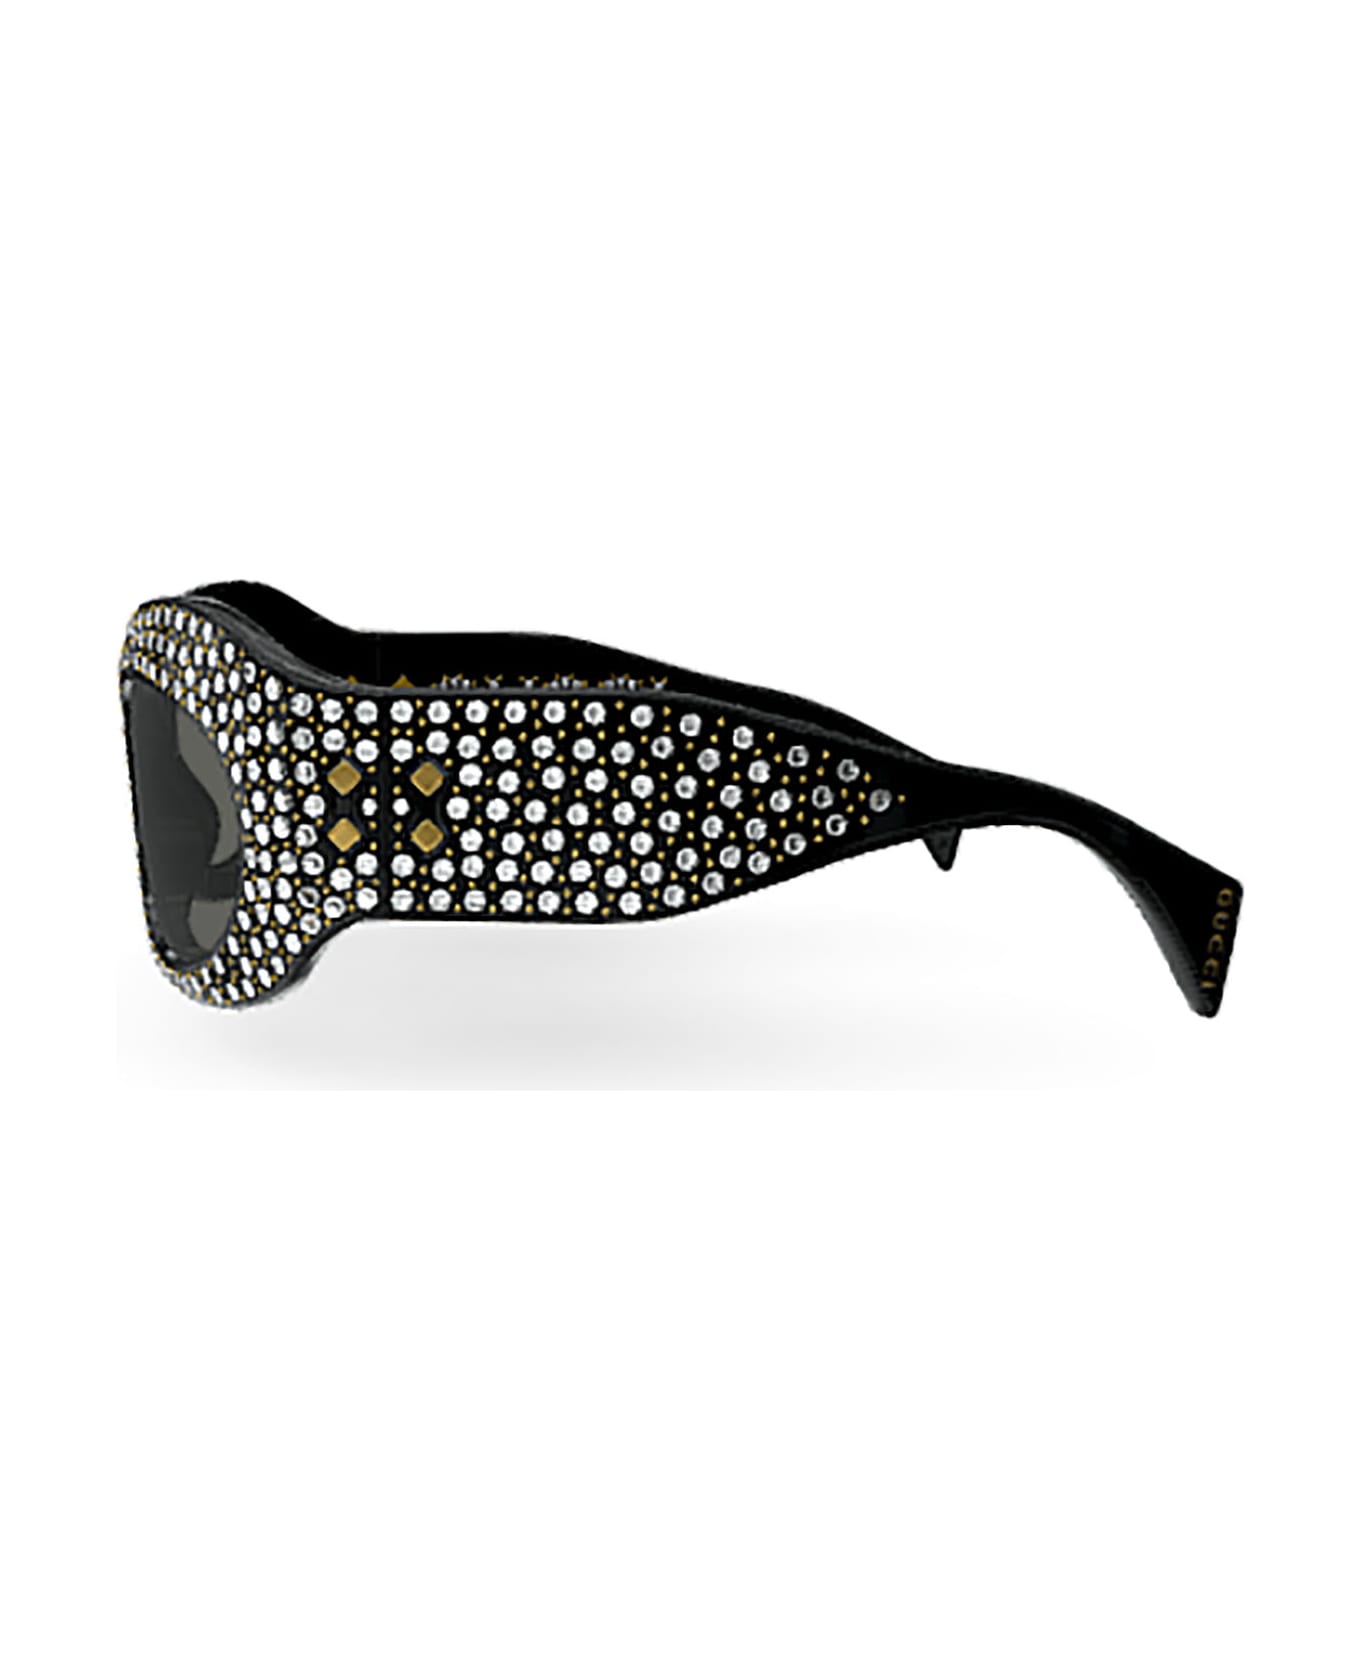 Gucci Eyewear Gg1463s Sunglasses - 005 black black grey